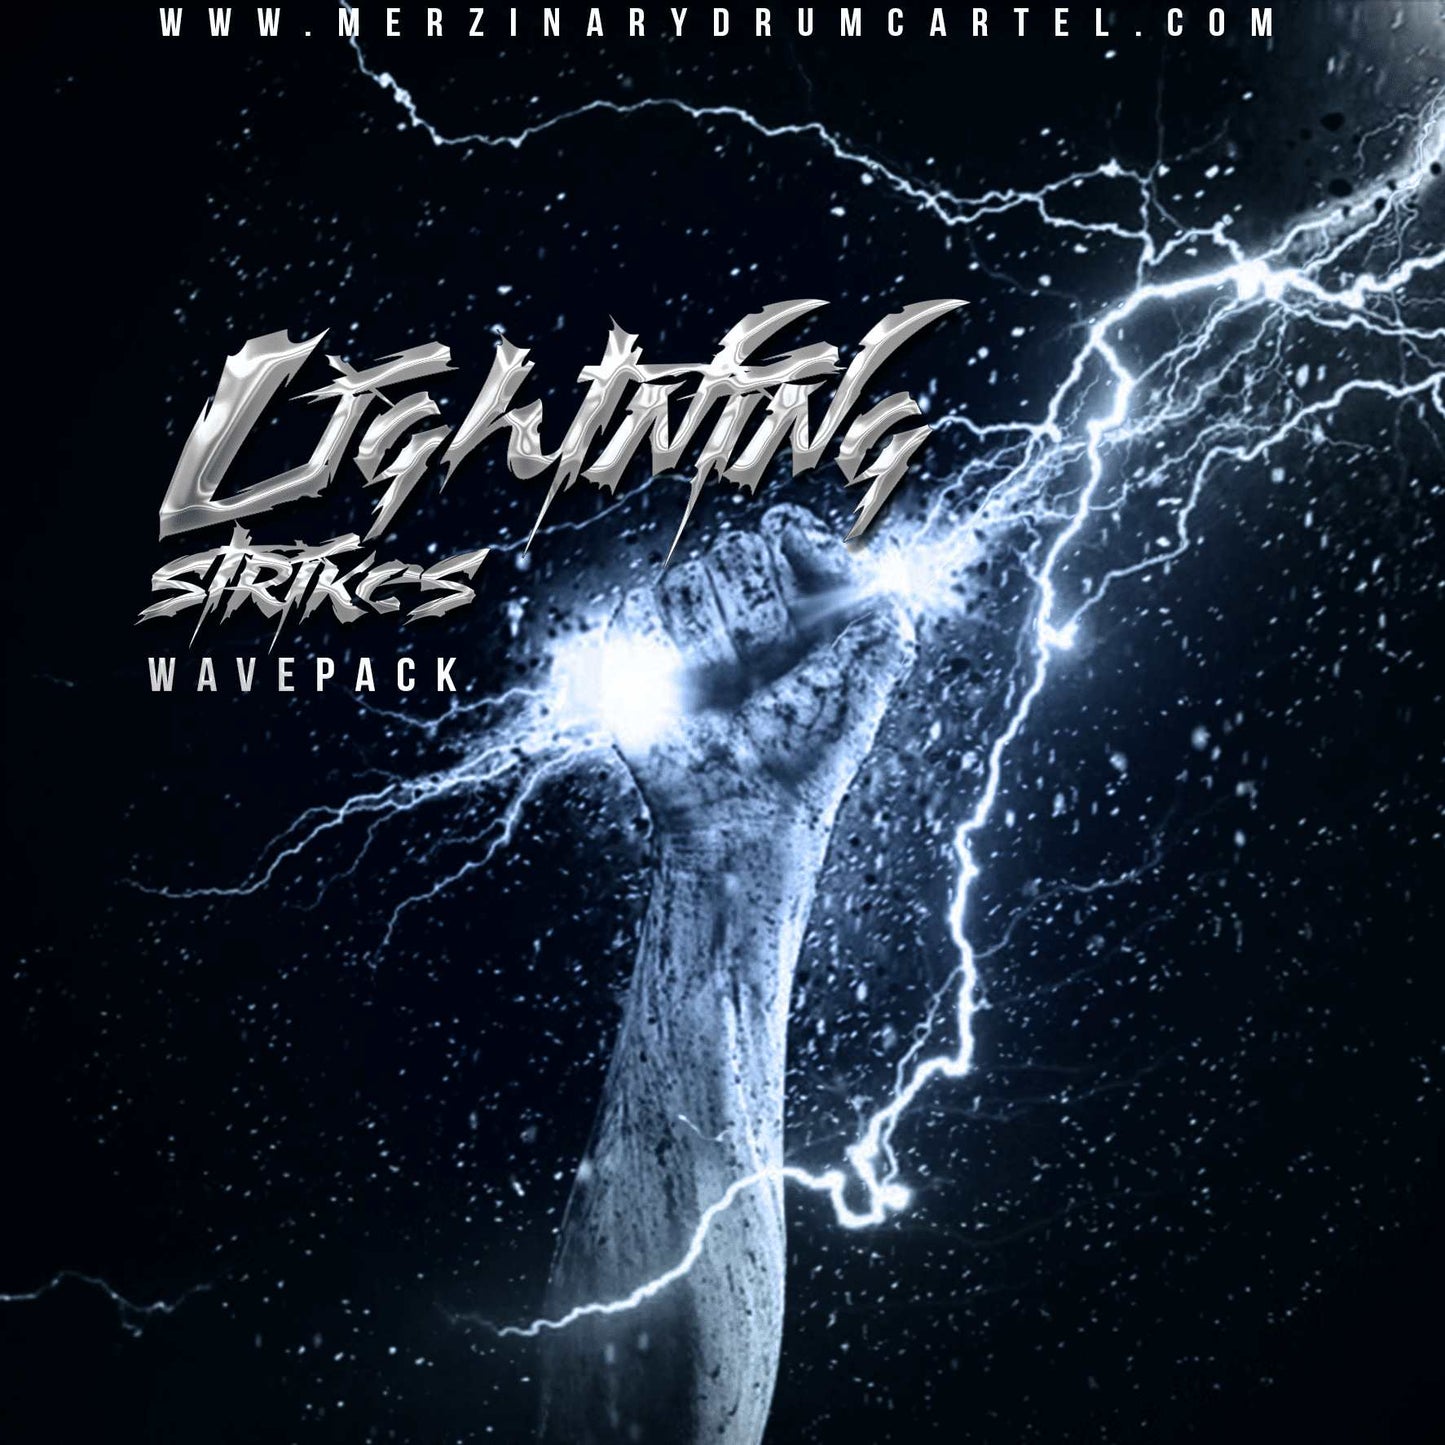 Lightning Strikes Wave Pack